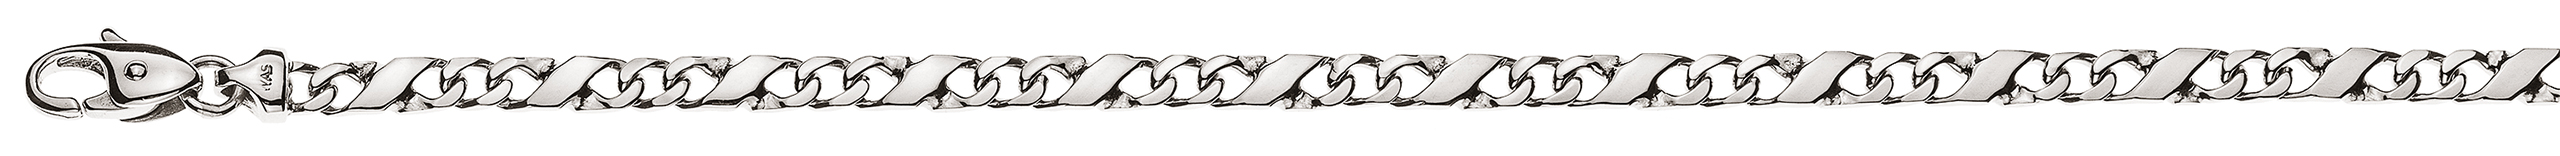 AURONOS Prestige Armband Carrera 18K Weissgold 22cm 4mm